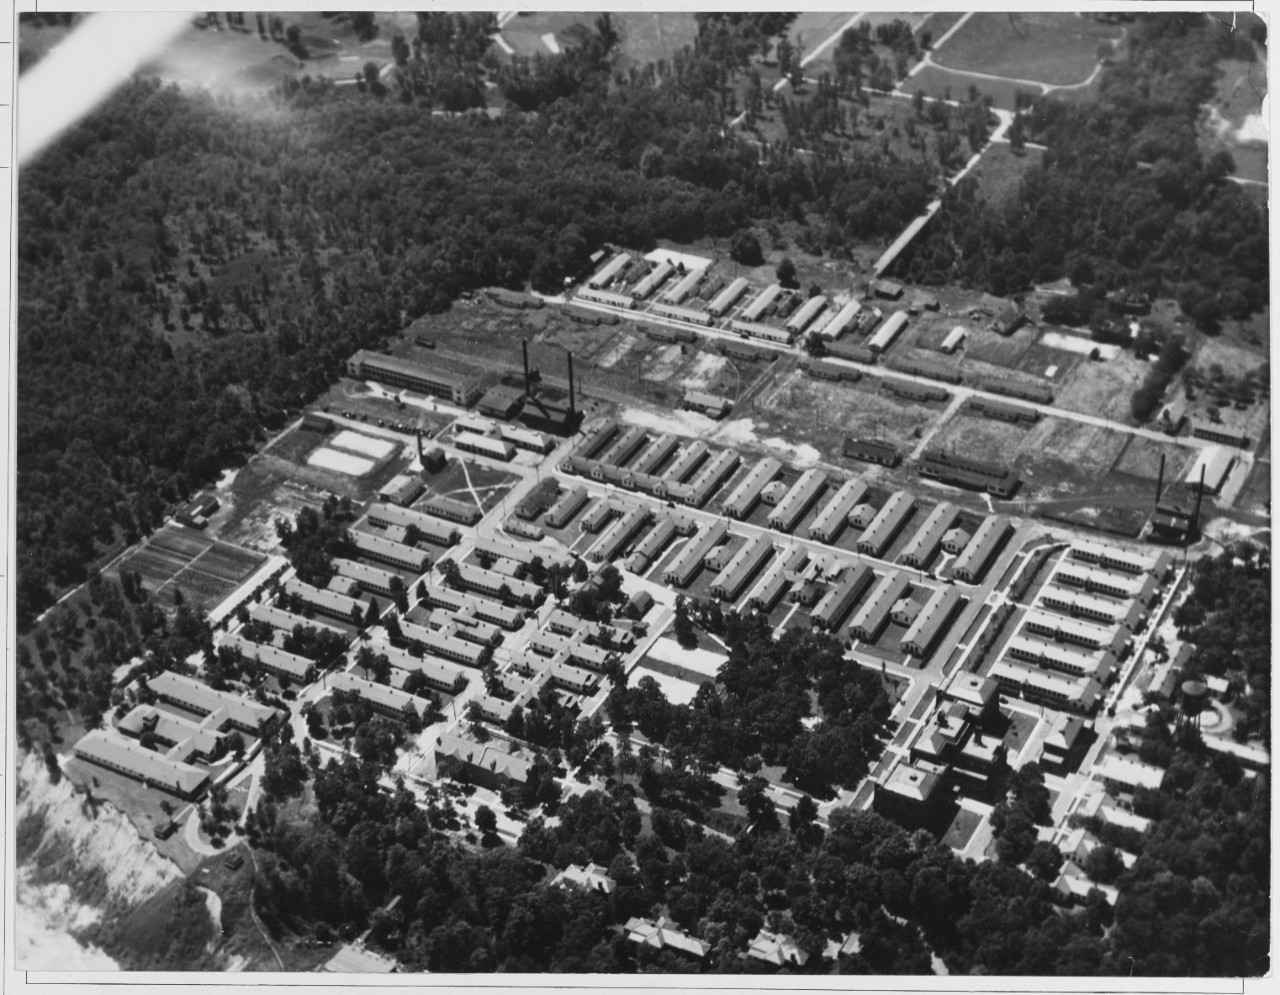 Great Lake. Ills. Naval Hospital. 1925